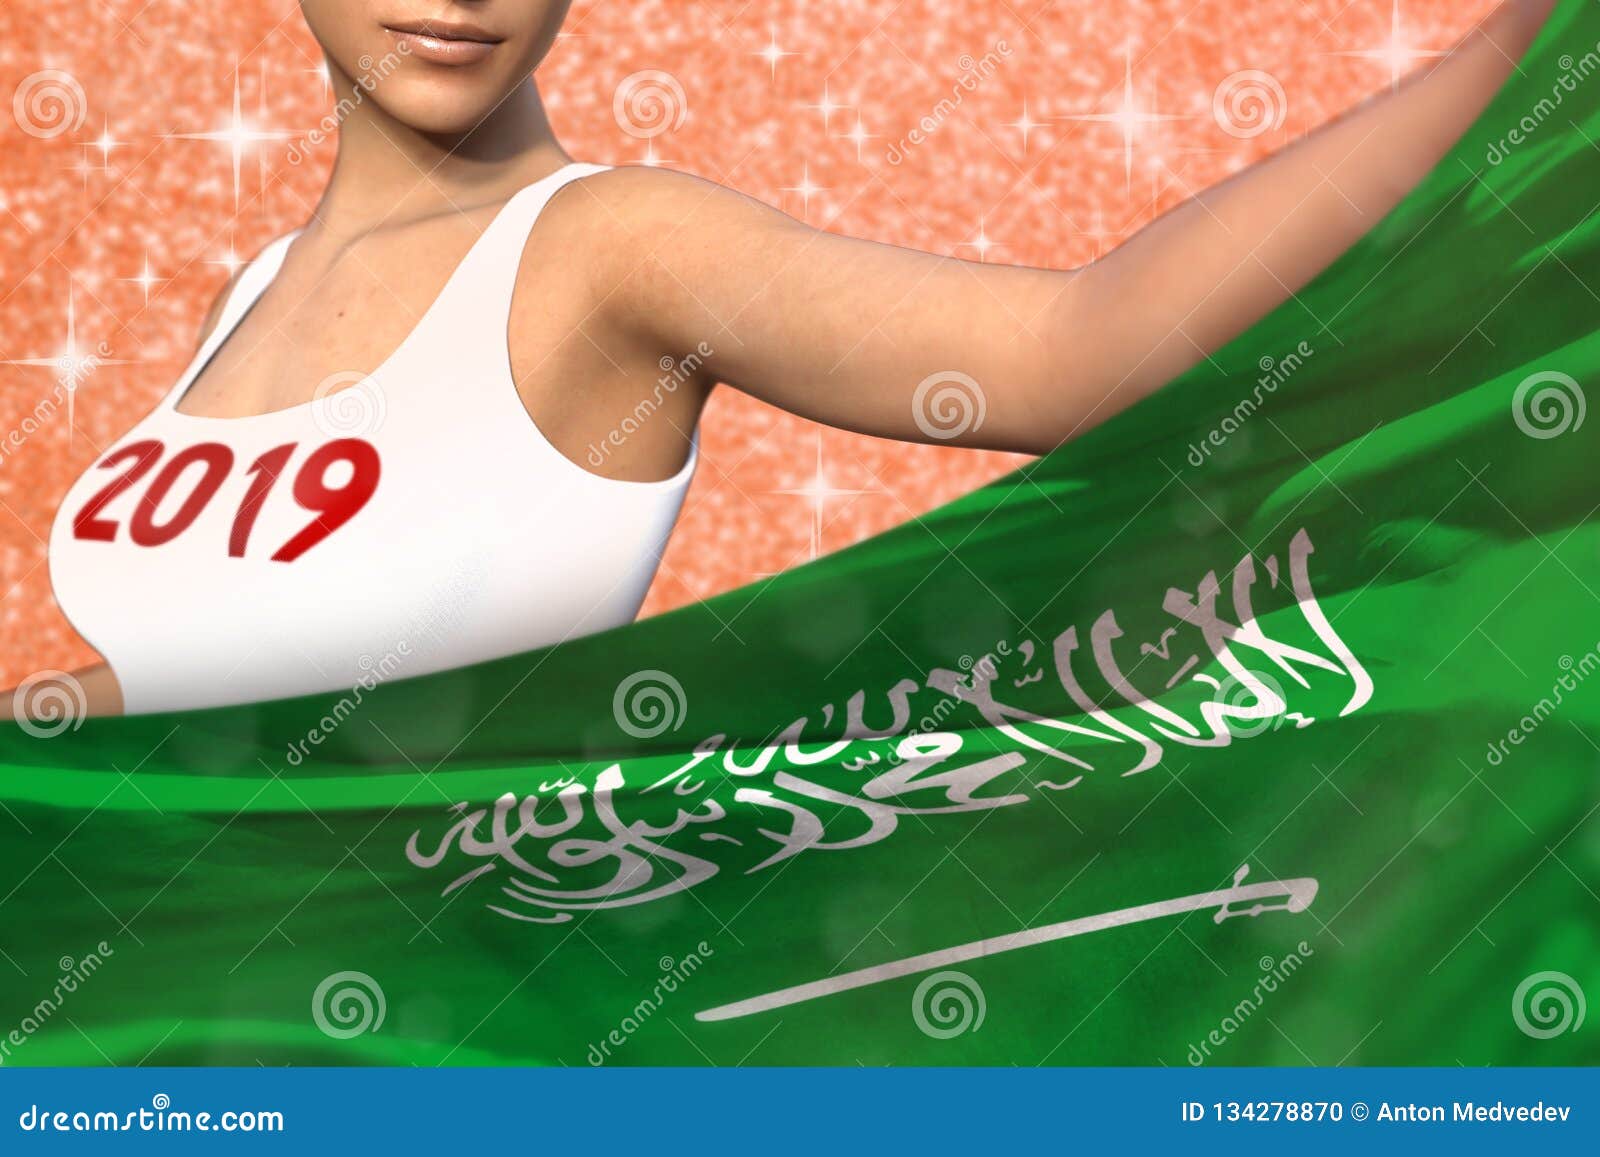 Arabia hot girls saudi Top 50